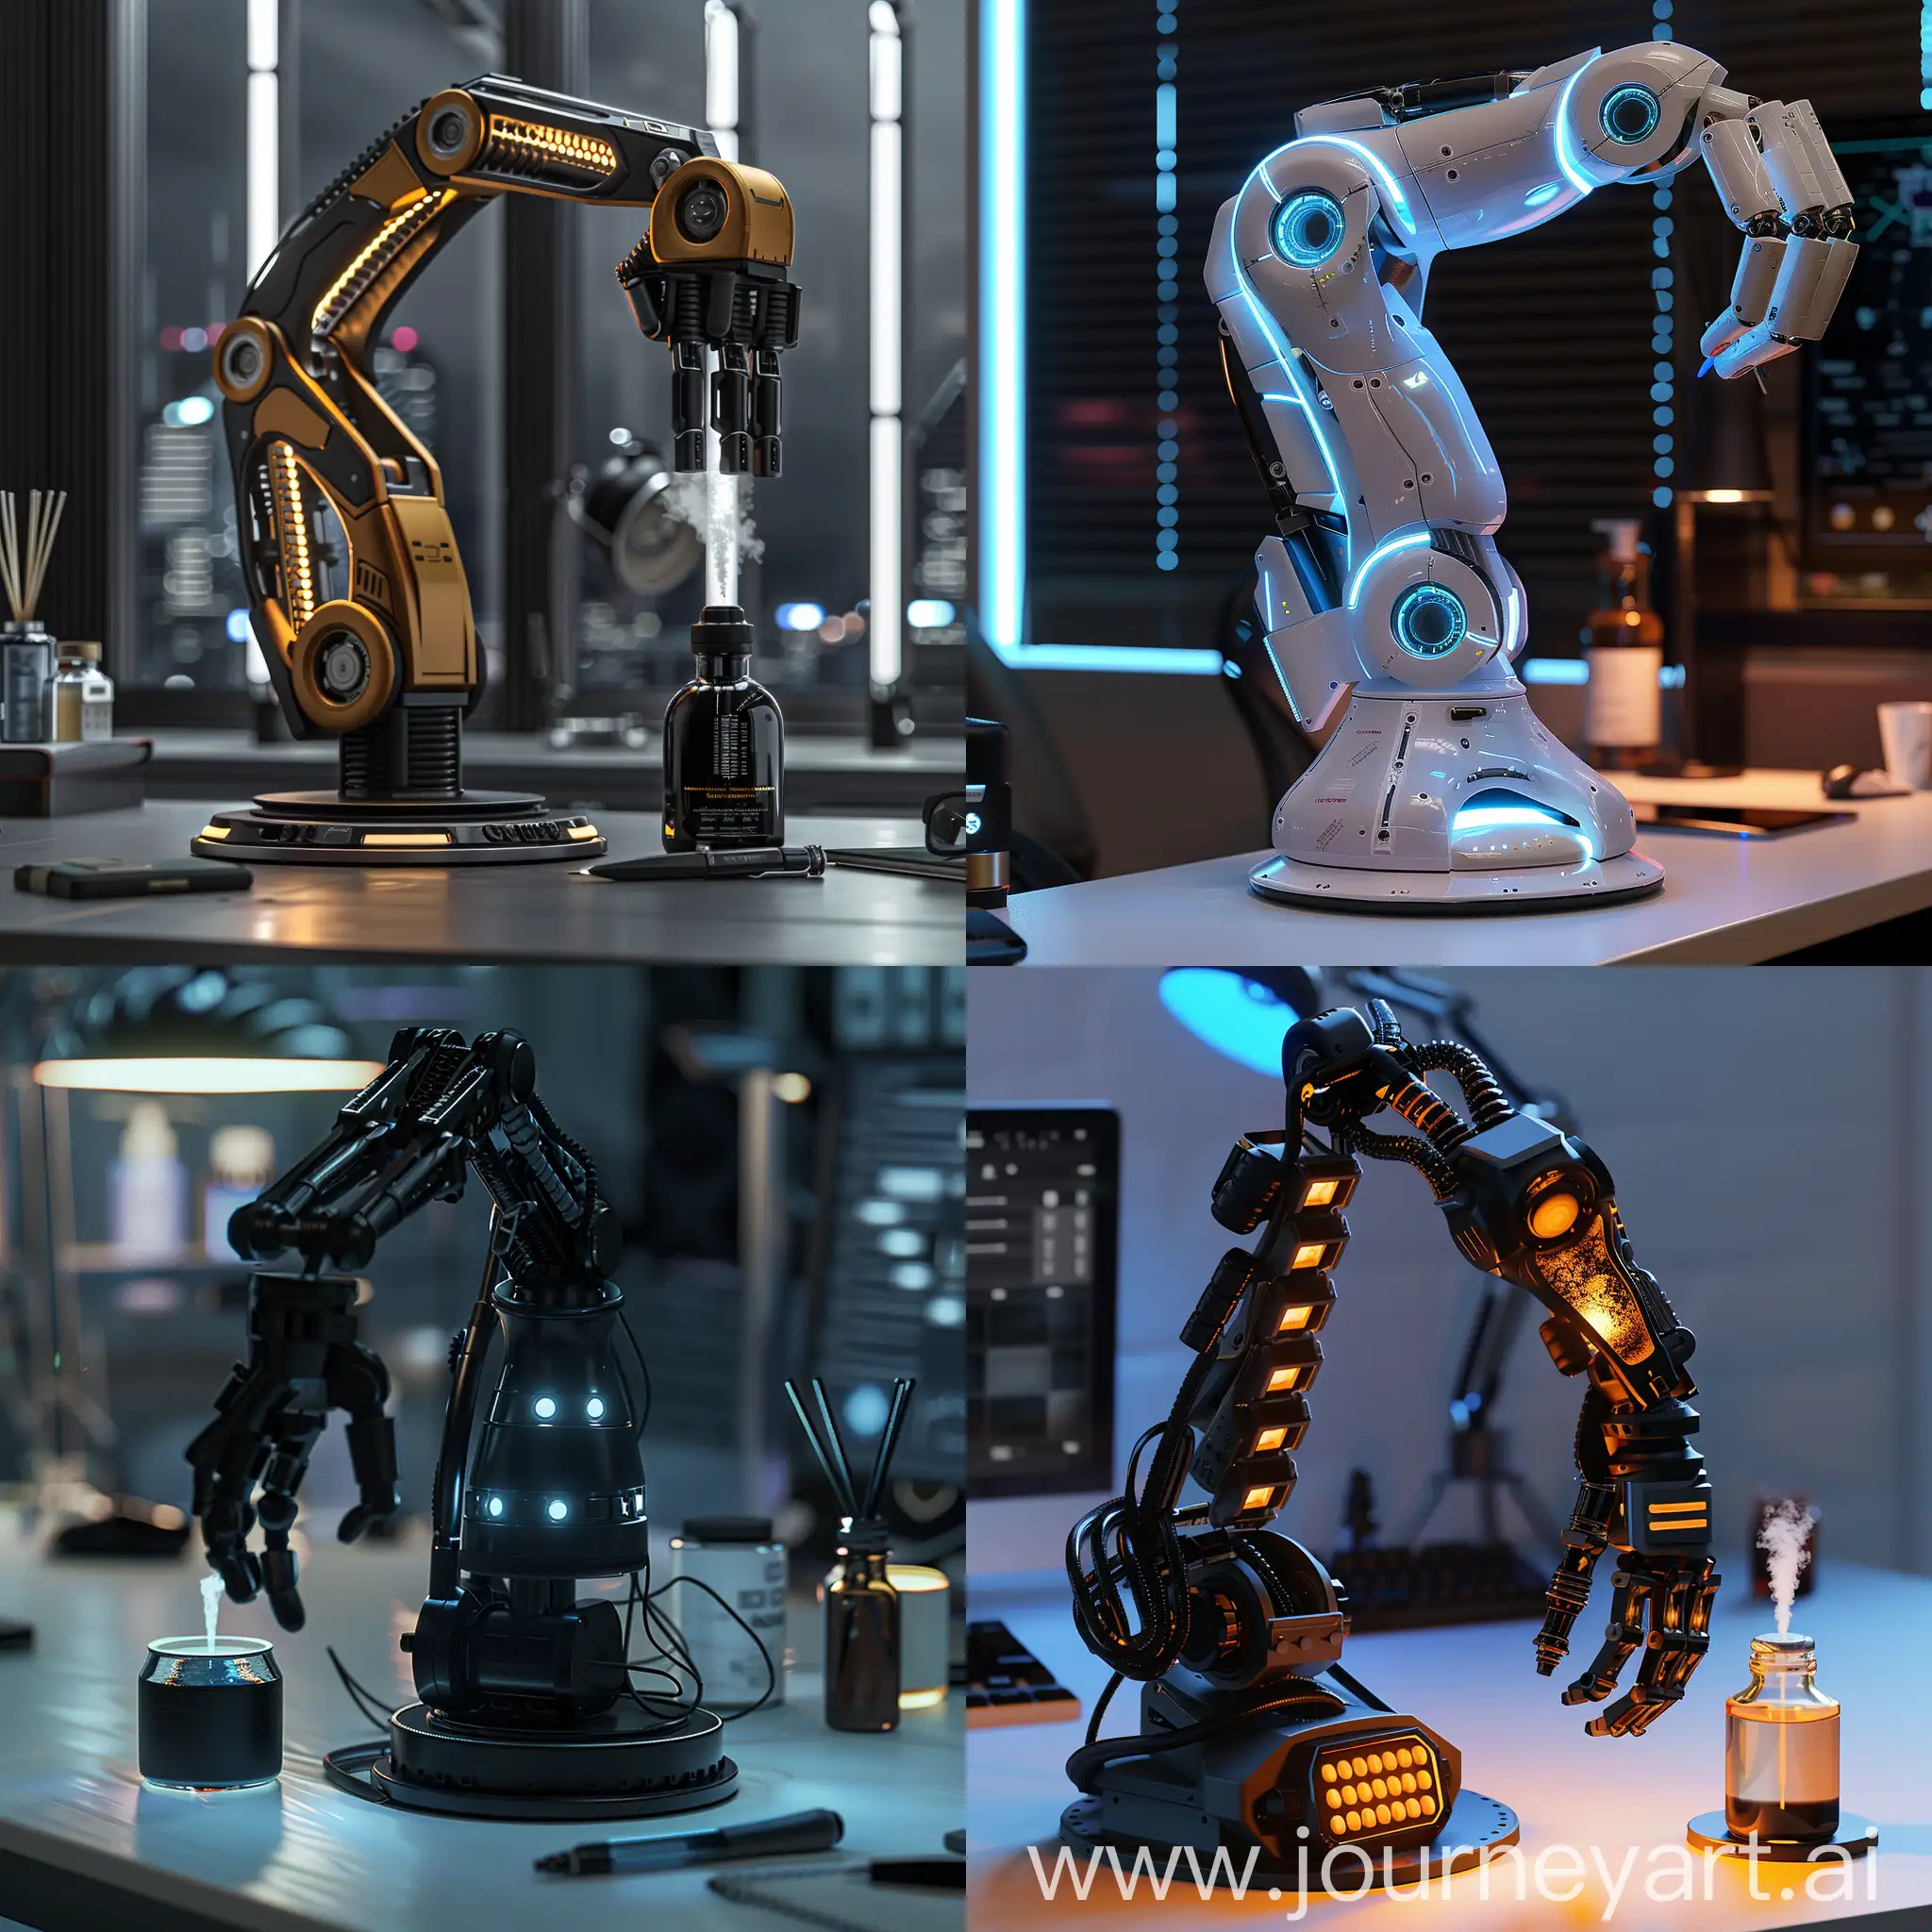 Futuristic-Cyberpunk-Industrial-Robotic-Arm-Desk-Light-and-Aroma-Diffuser